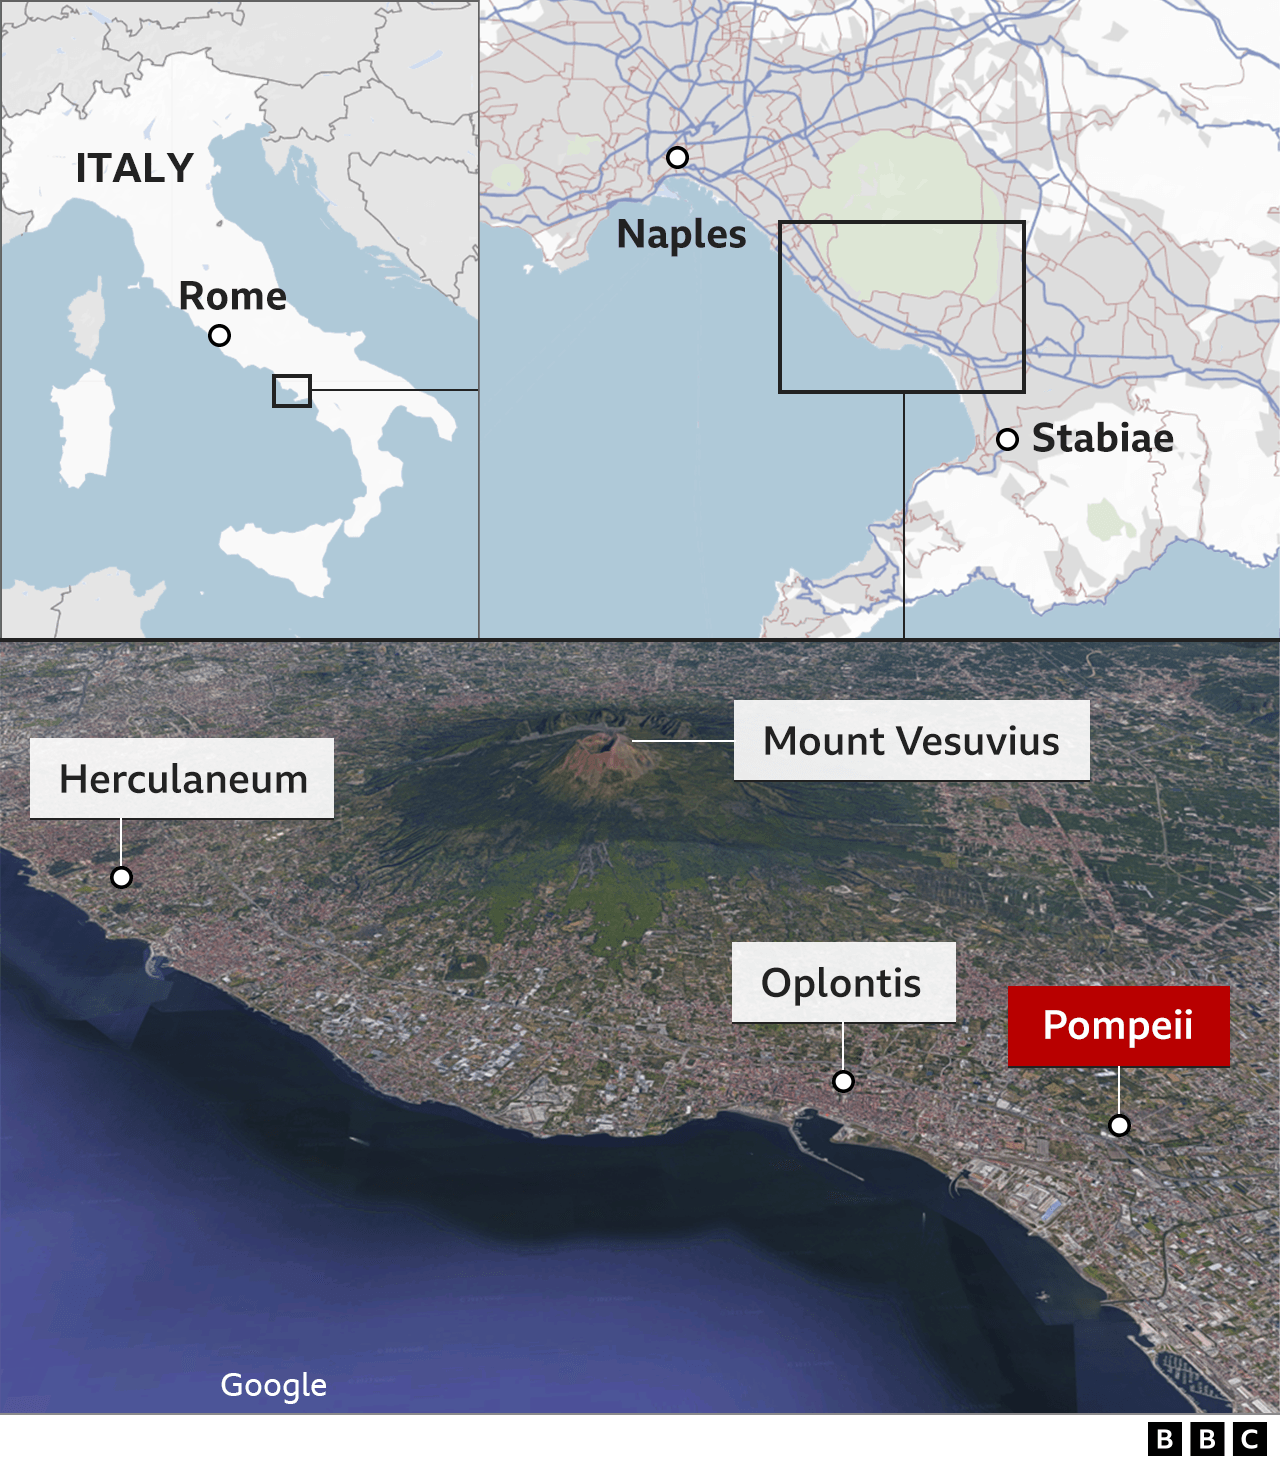 Карта с указанием Помпеи недалеко от Неаполя на юге Италии